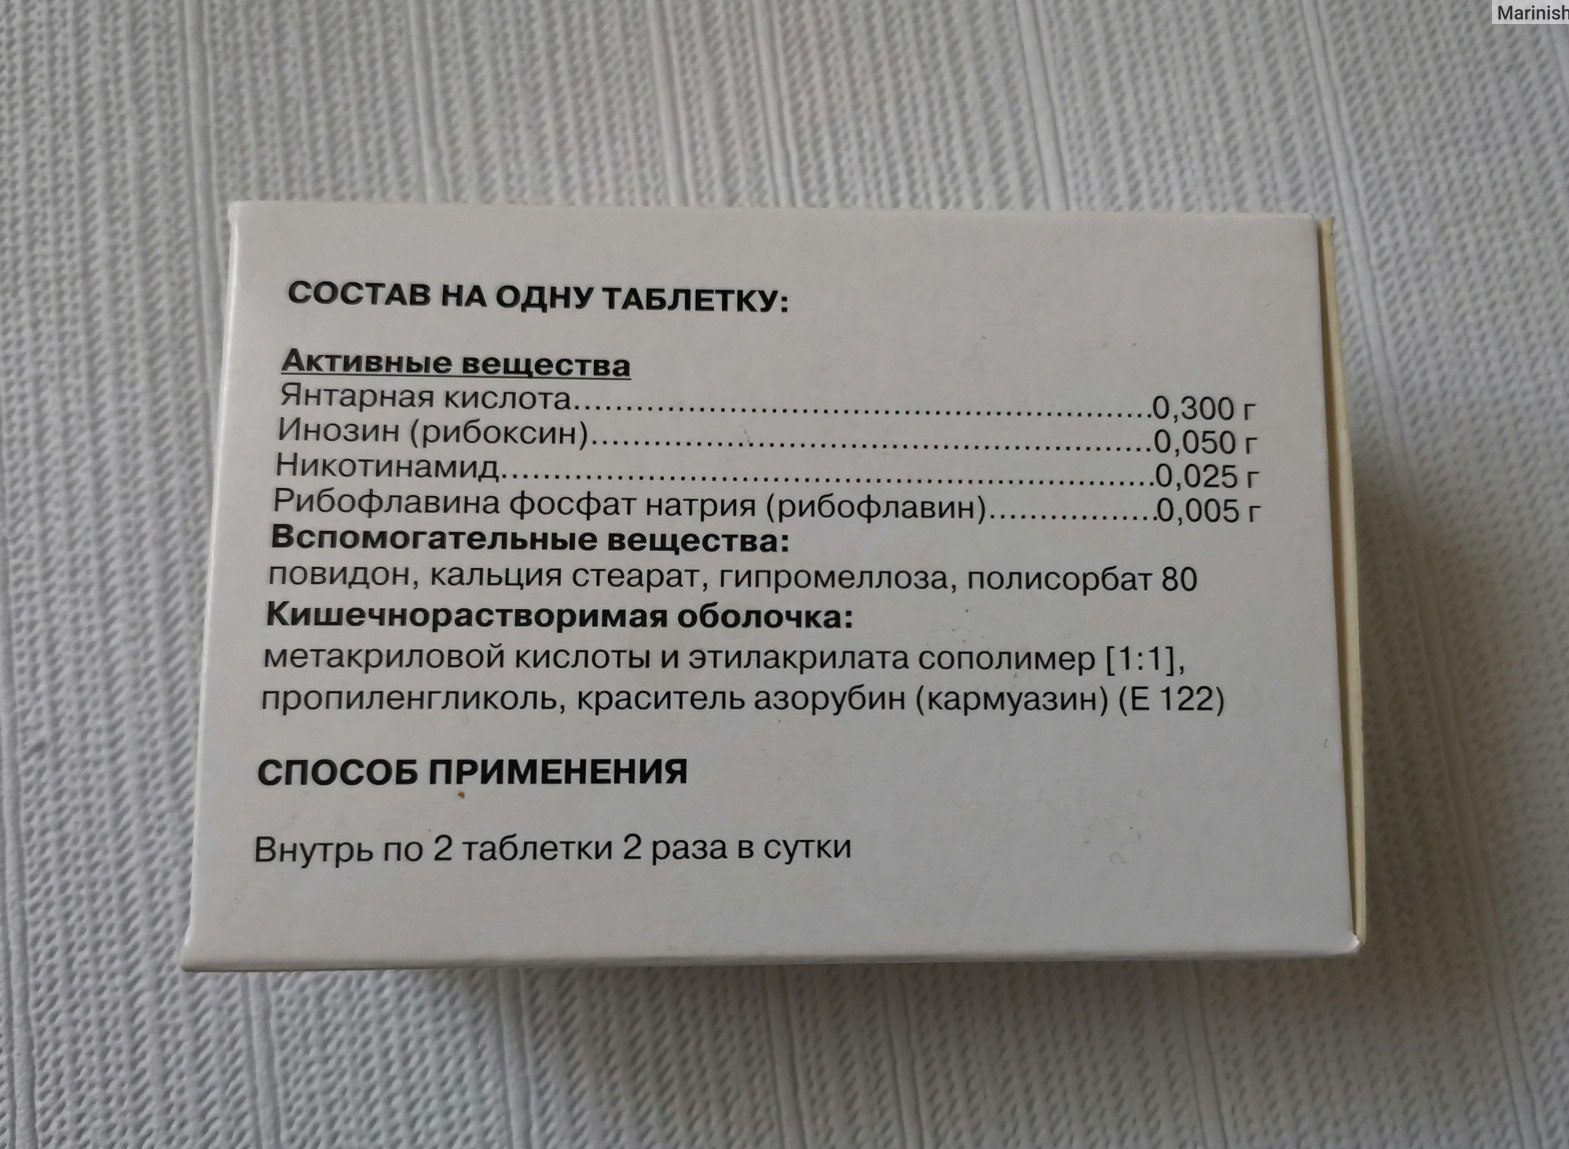 таблетки цитофлавин лечение, цитофлавин таблетки применение, купить таблетки цитофлавин одесса